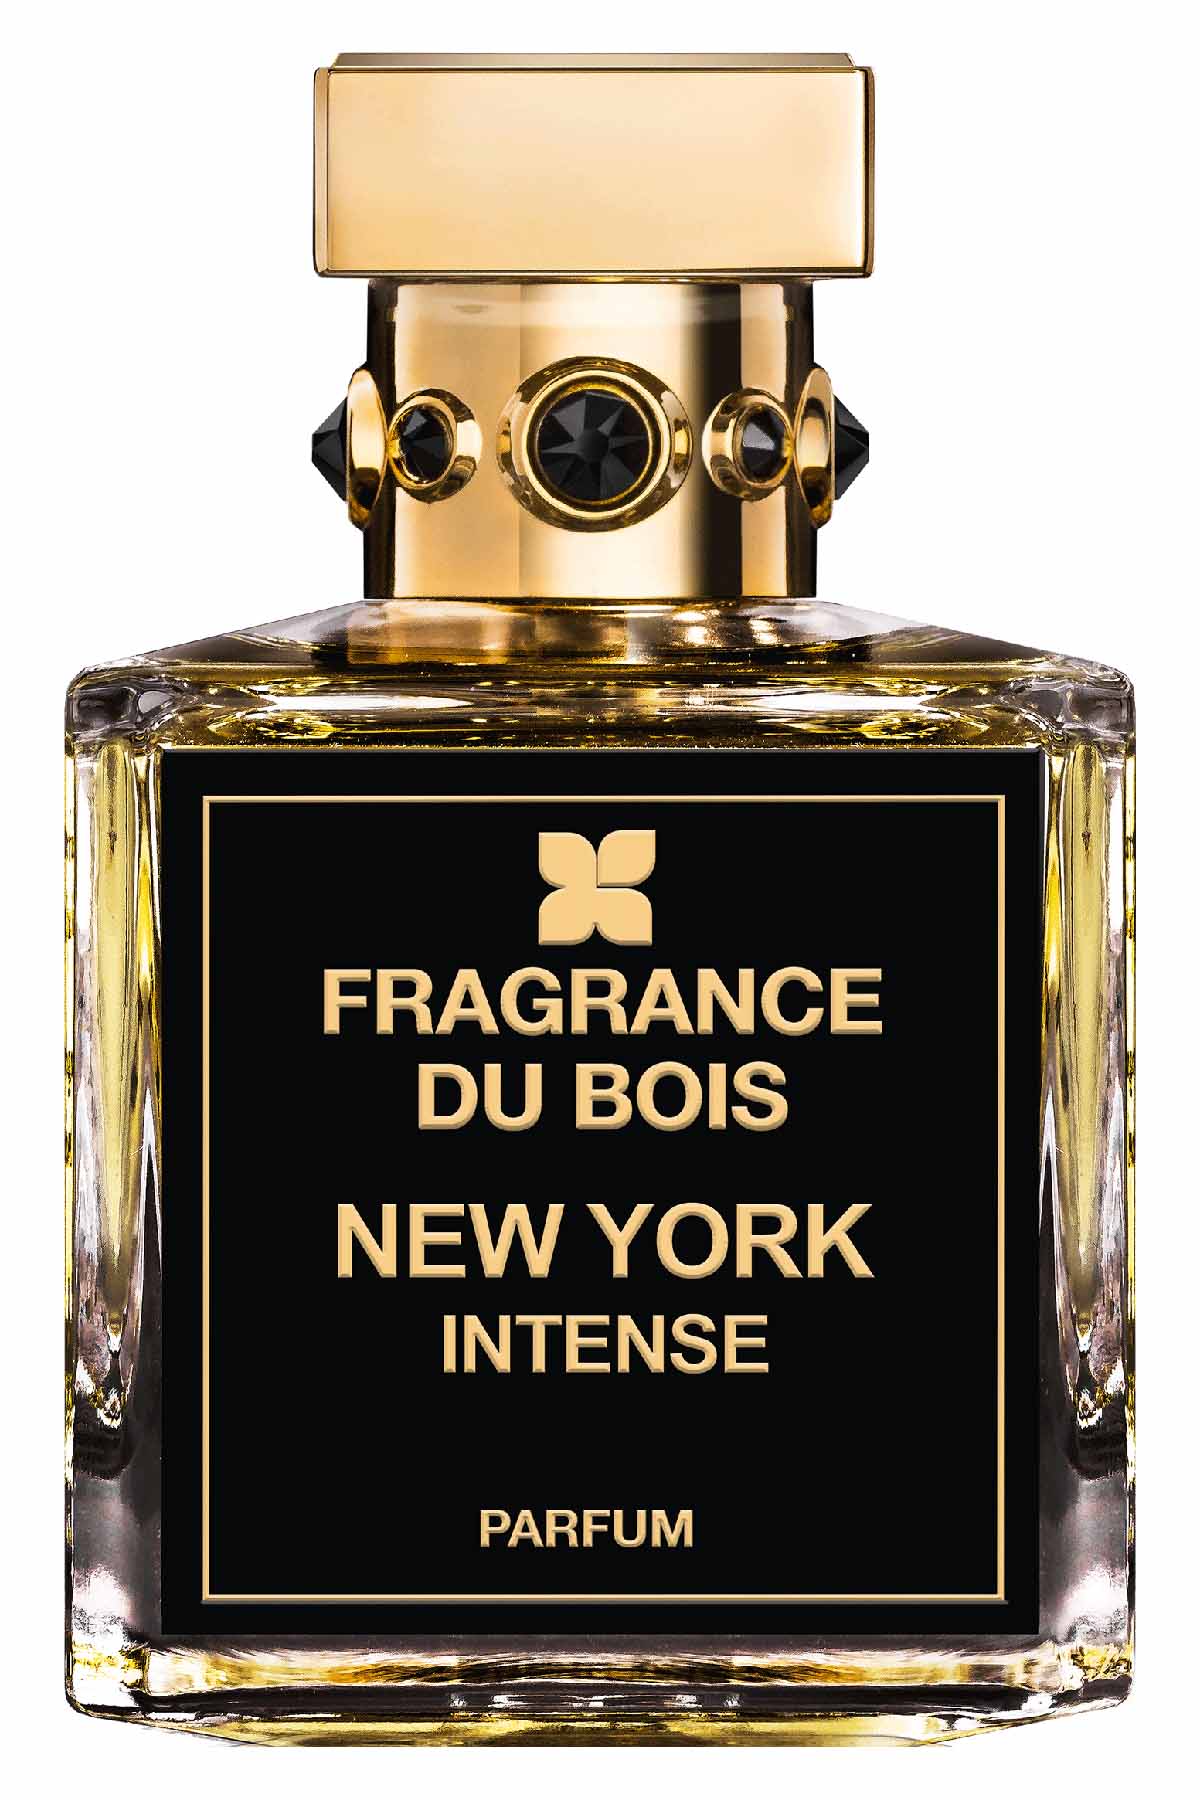 Fragrance Du Bois New York Intense Parfum